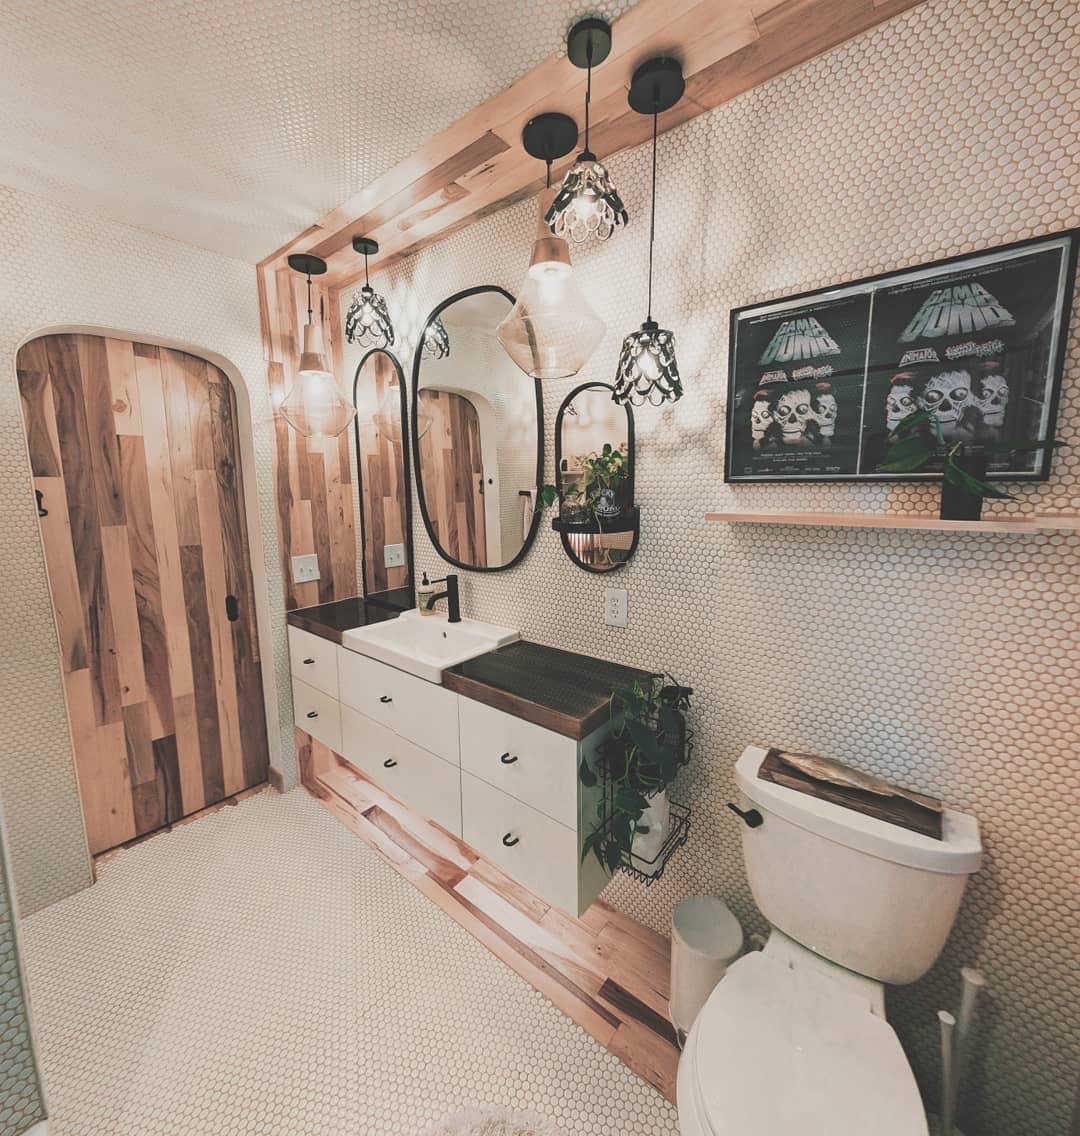 35 bathroomdesign Ideas You’ll Love DIY;diybathroom;bathroomdesign;farmhousebathroom;simplehomestyle;fixerupperstyle;vintagefinds